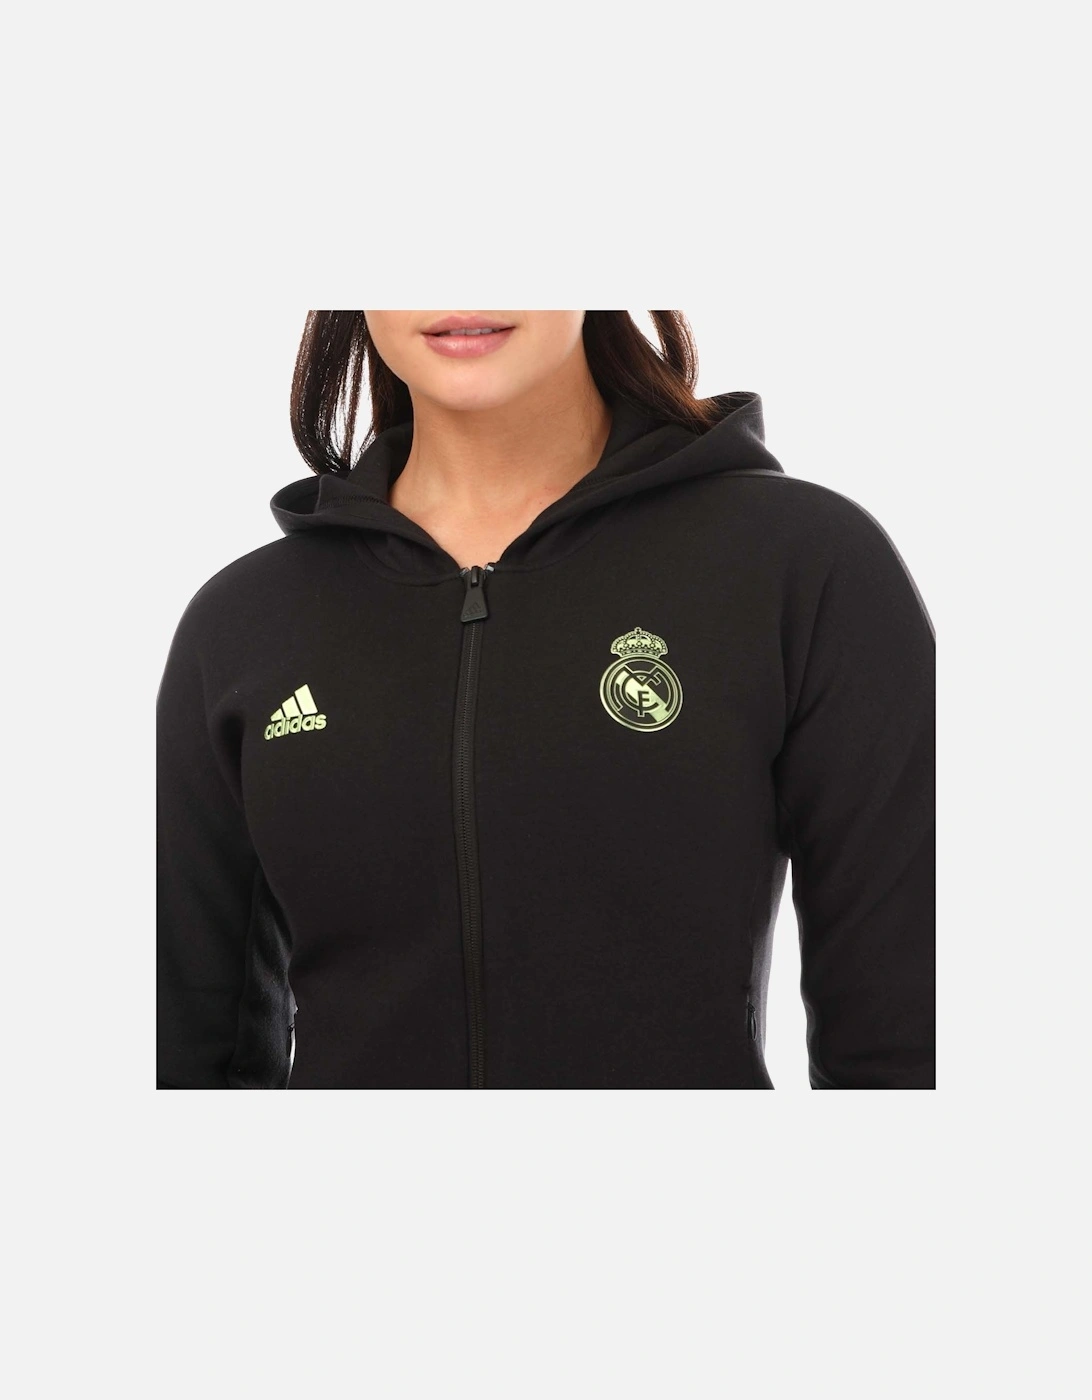 Womens Real Madrid Anthem Jacket